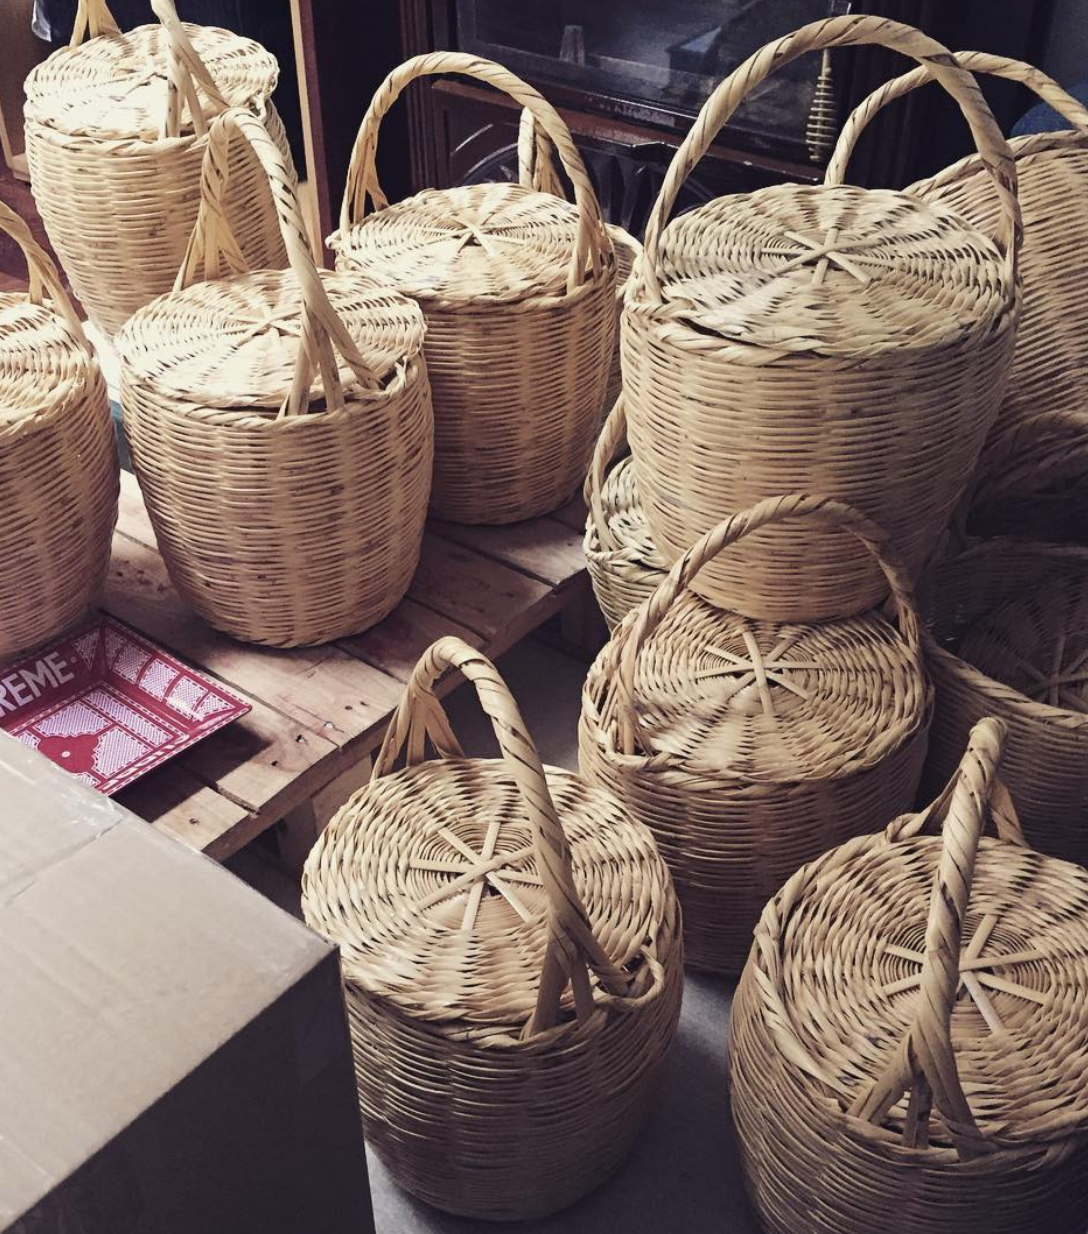 Bonjour Coco Brings the Real Handmade Jane Birkin Basket to Market